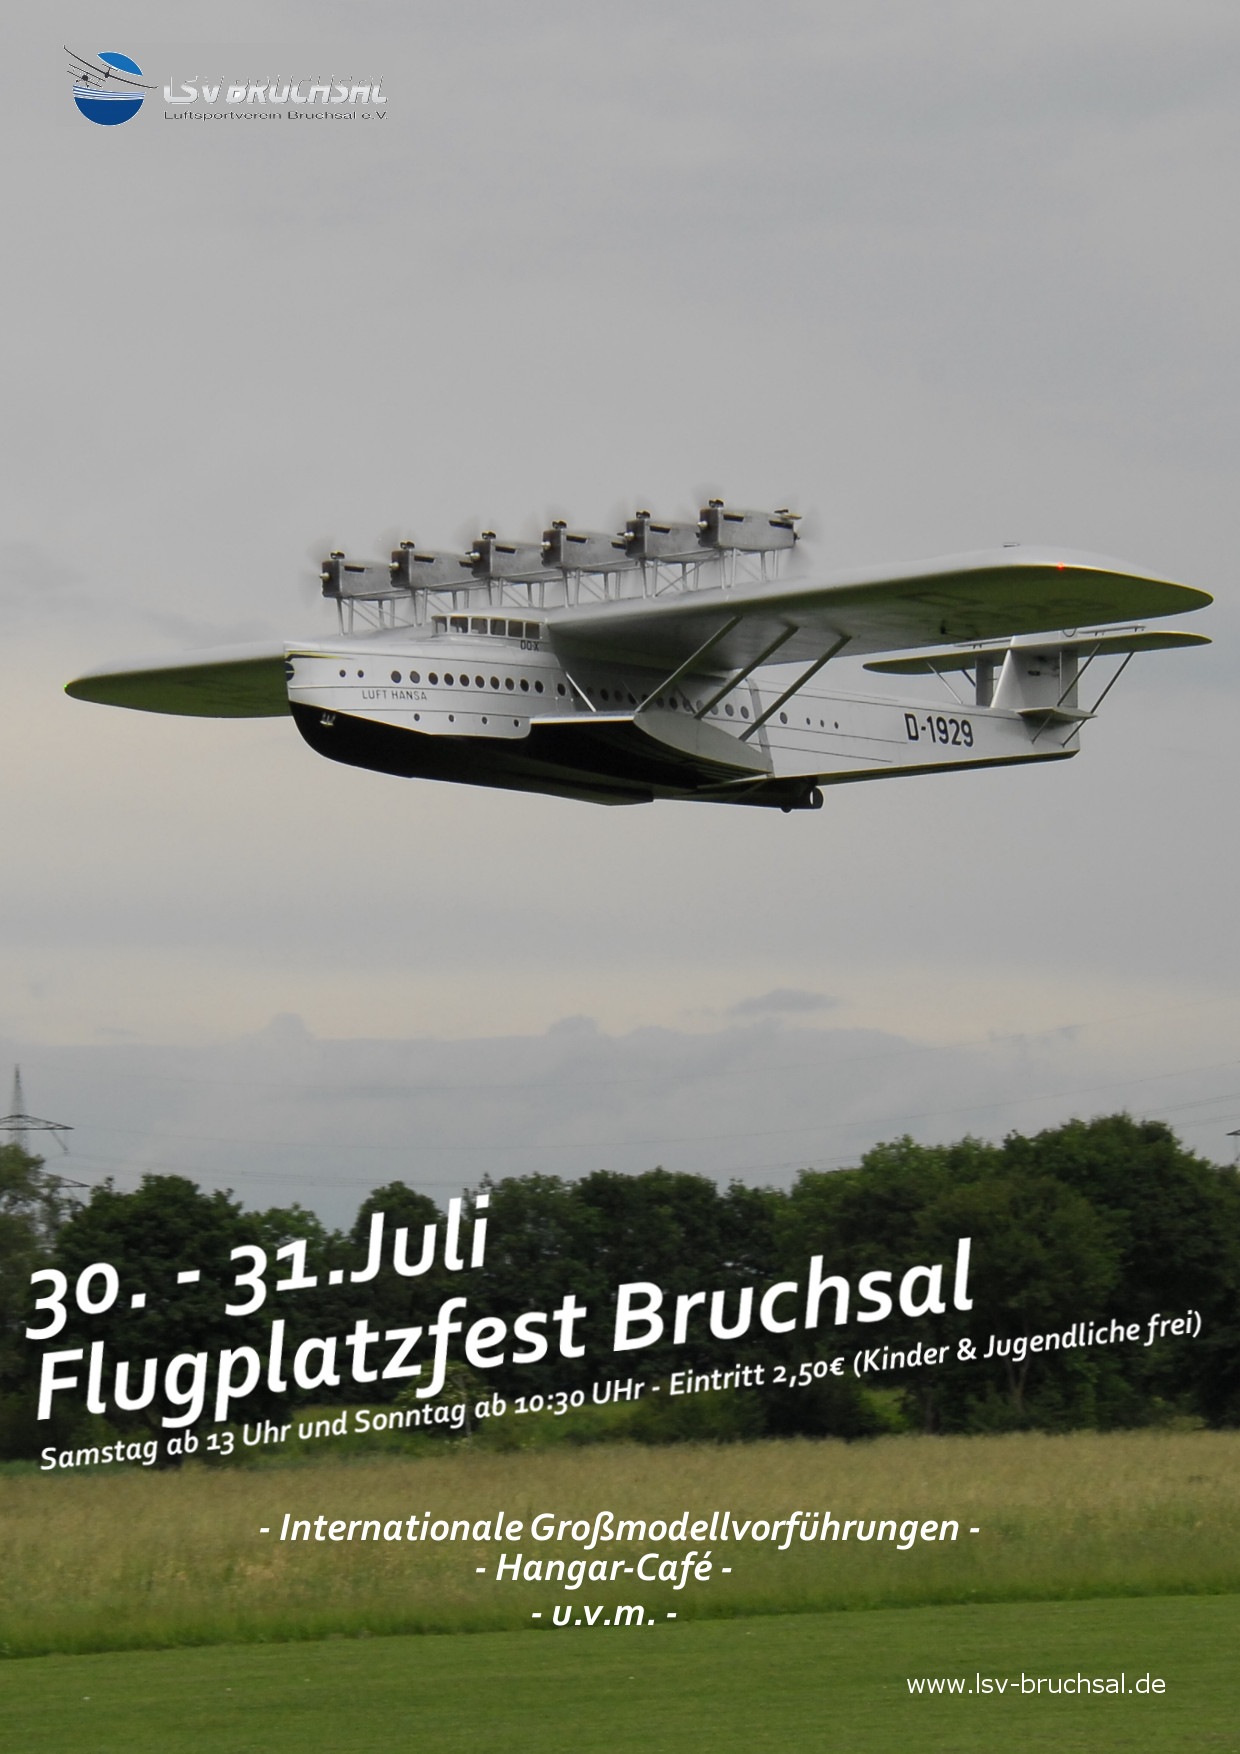 Flugplatzfest Luftsportverein (LSV) Bruchsal e.V.